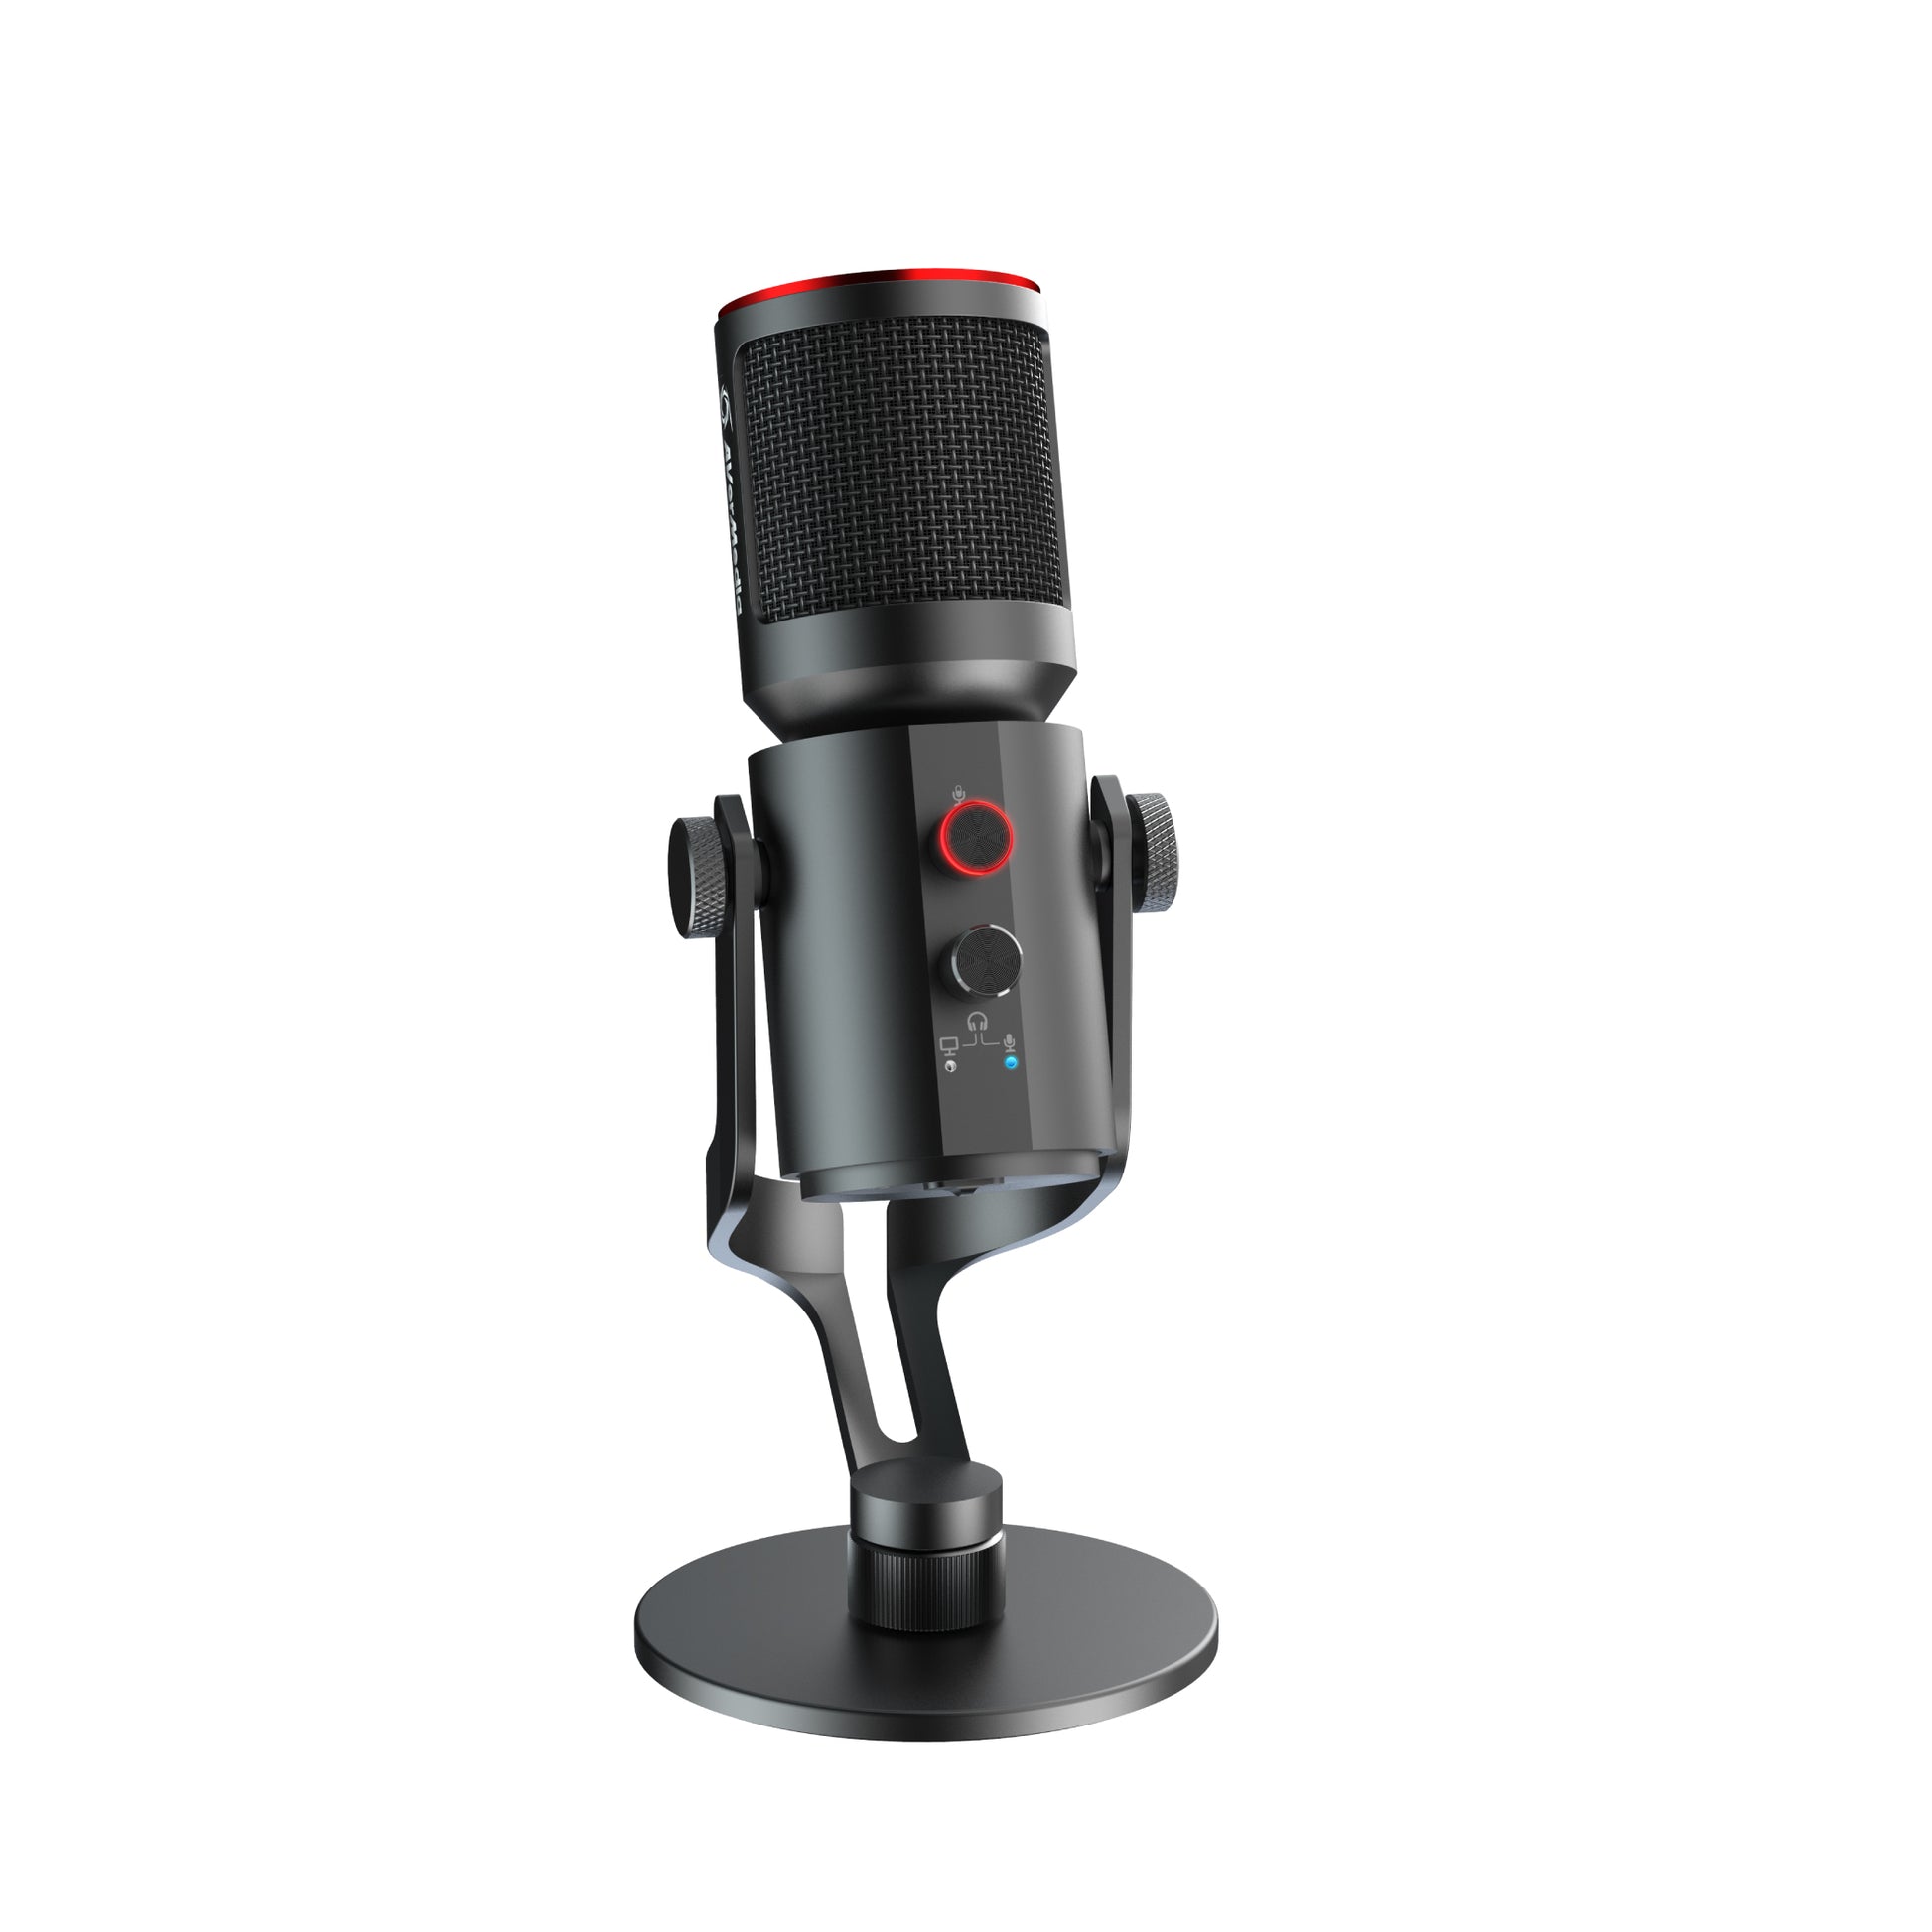 Limited Edition] AVerMedia Kit AVerMedia Technologies – | AVerMedia Streamer AM350 Live Microphone